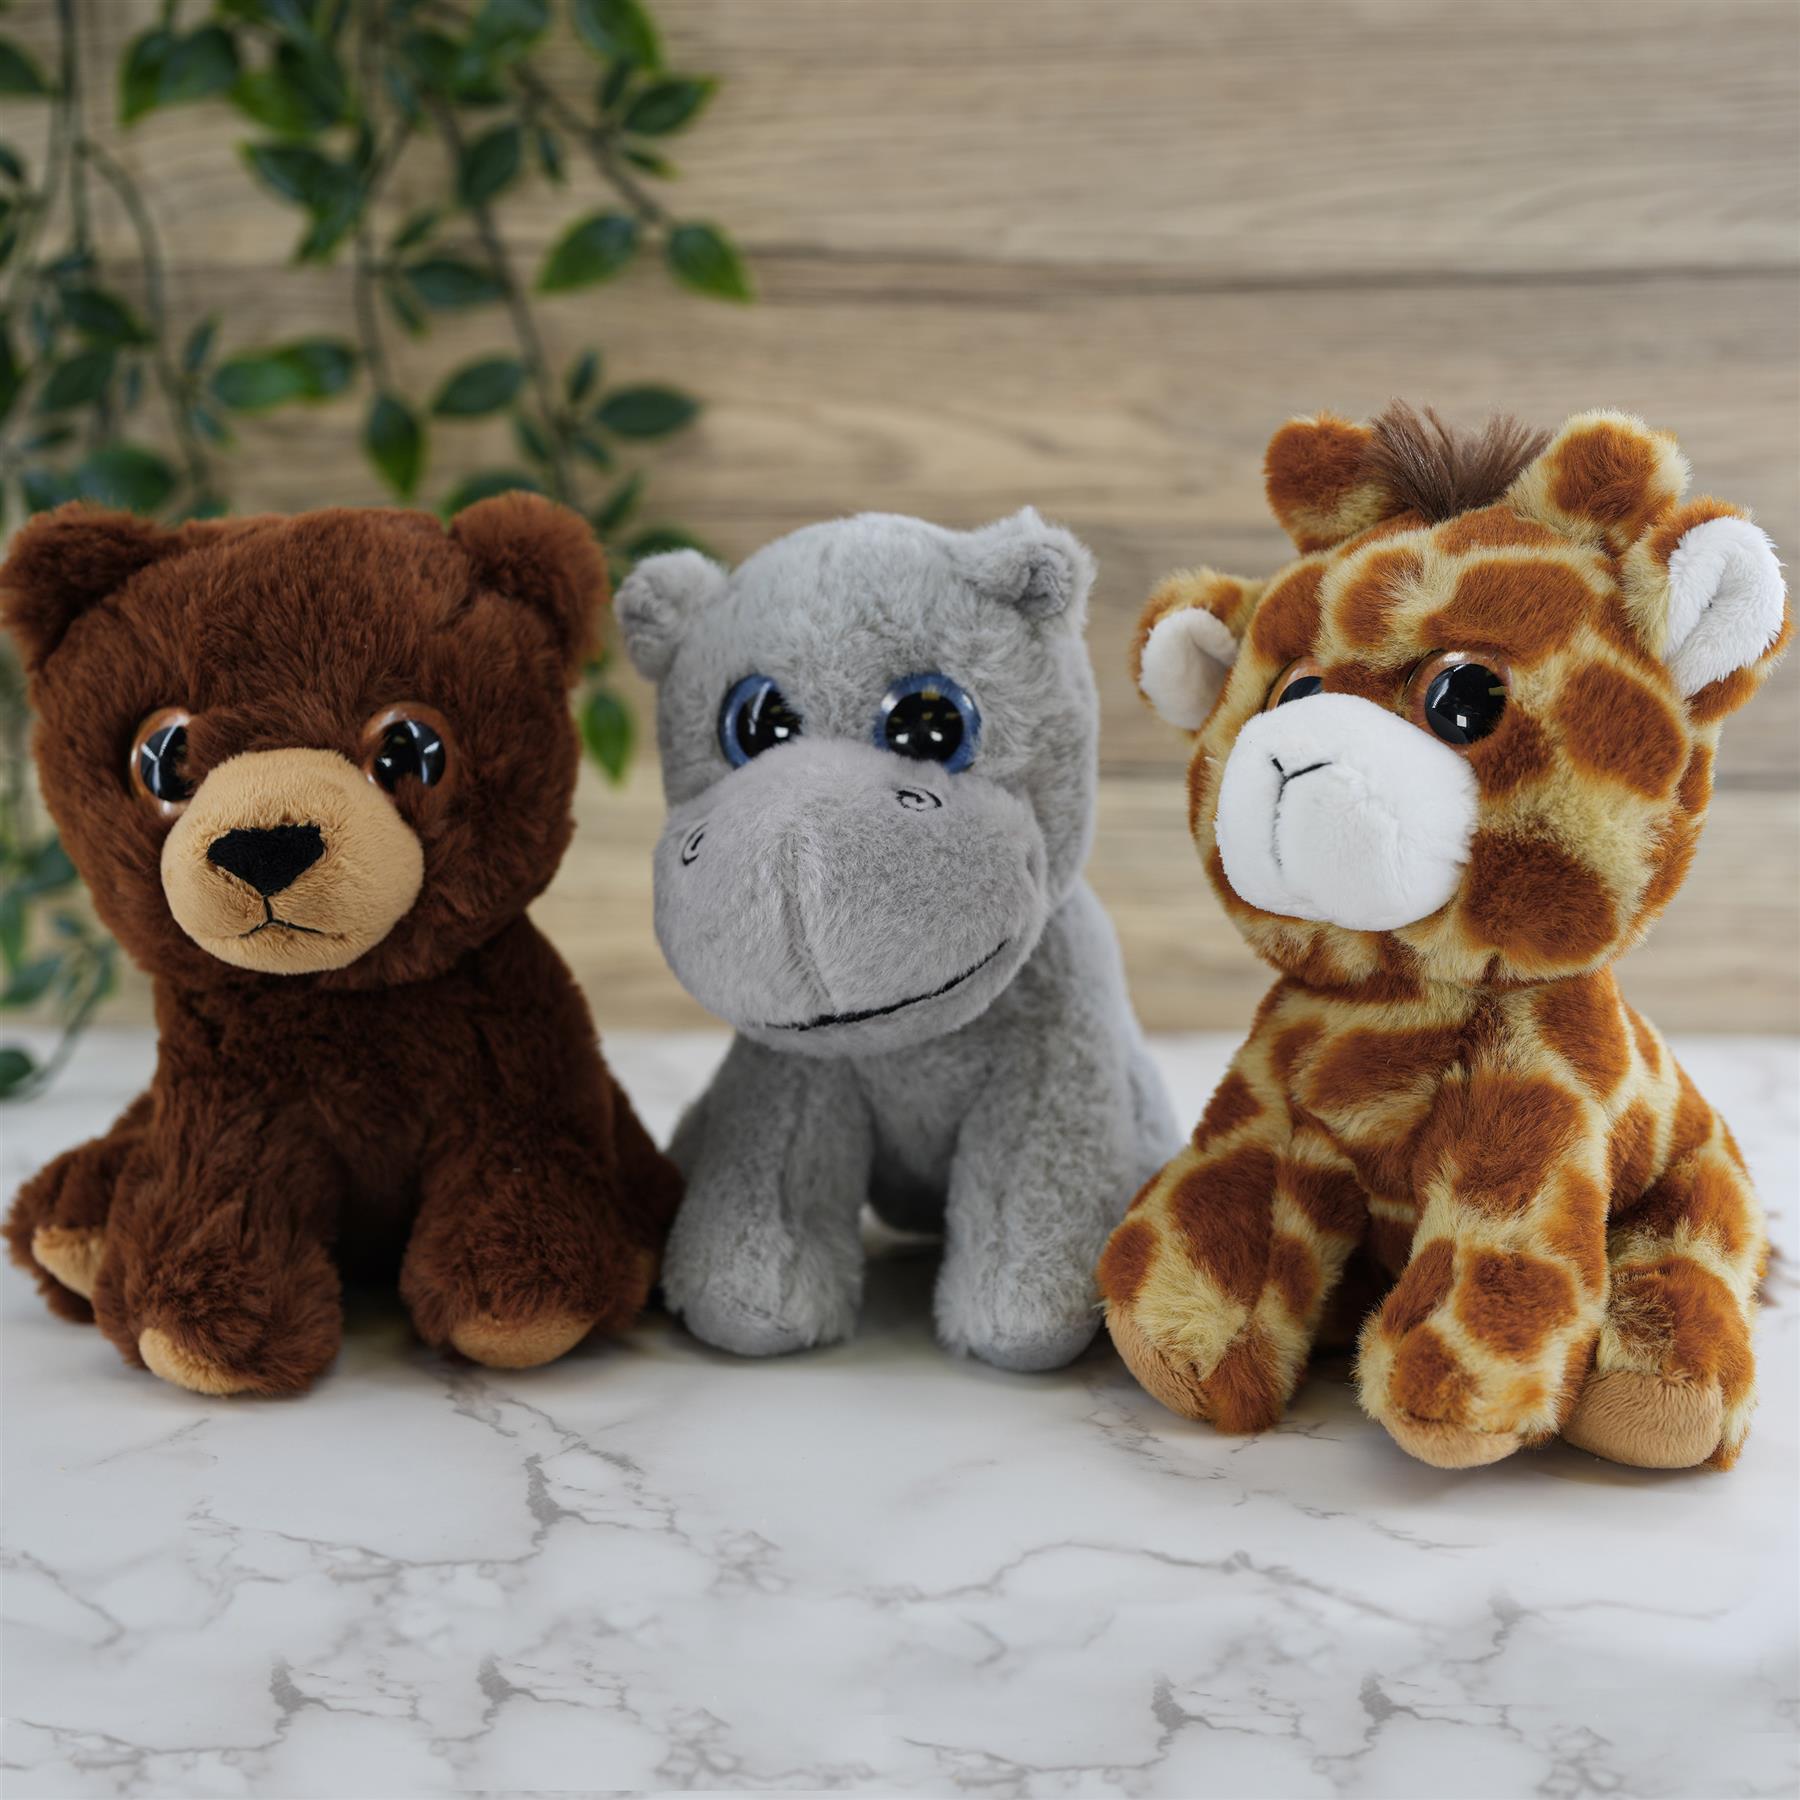 The Magic Toy Shop Plush Soft Toy Safari Animals Set of 6 Soft Plush Animals Toys